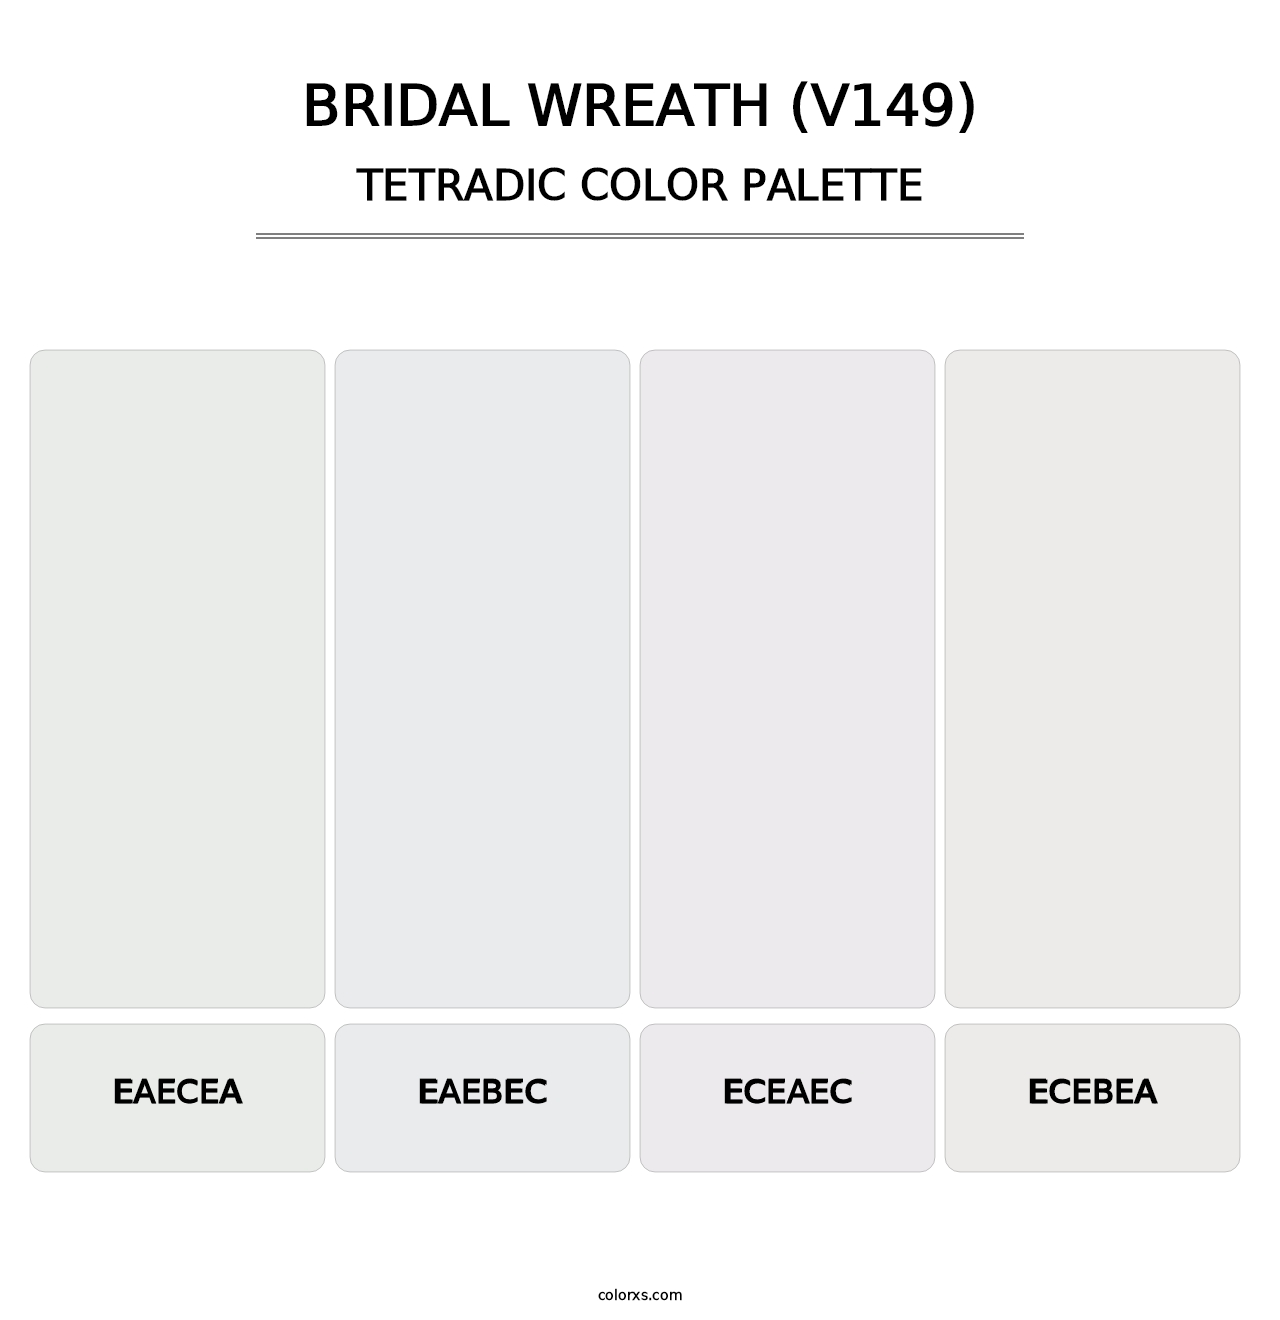 Bridal Wreath (V149) - Tetradic Color Palette